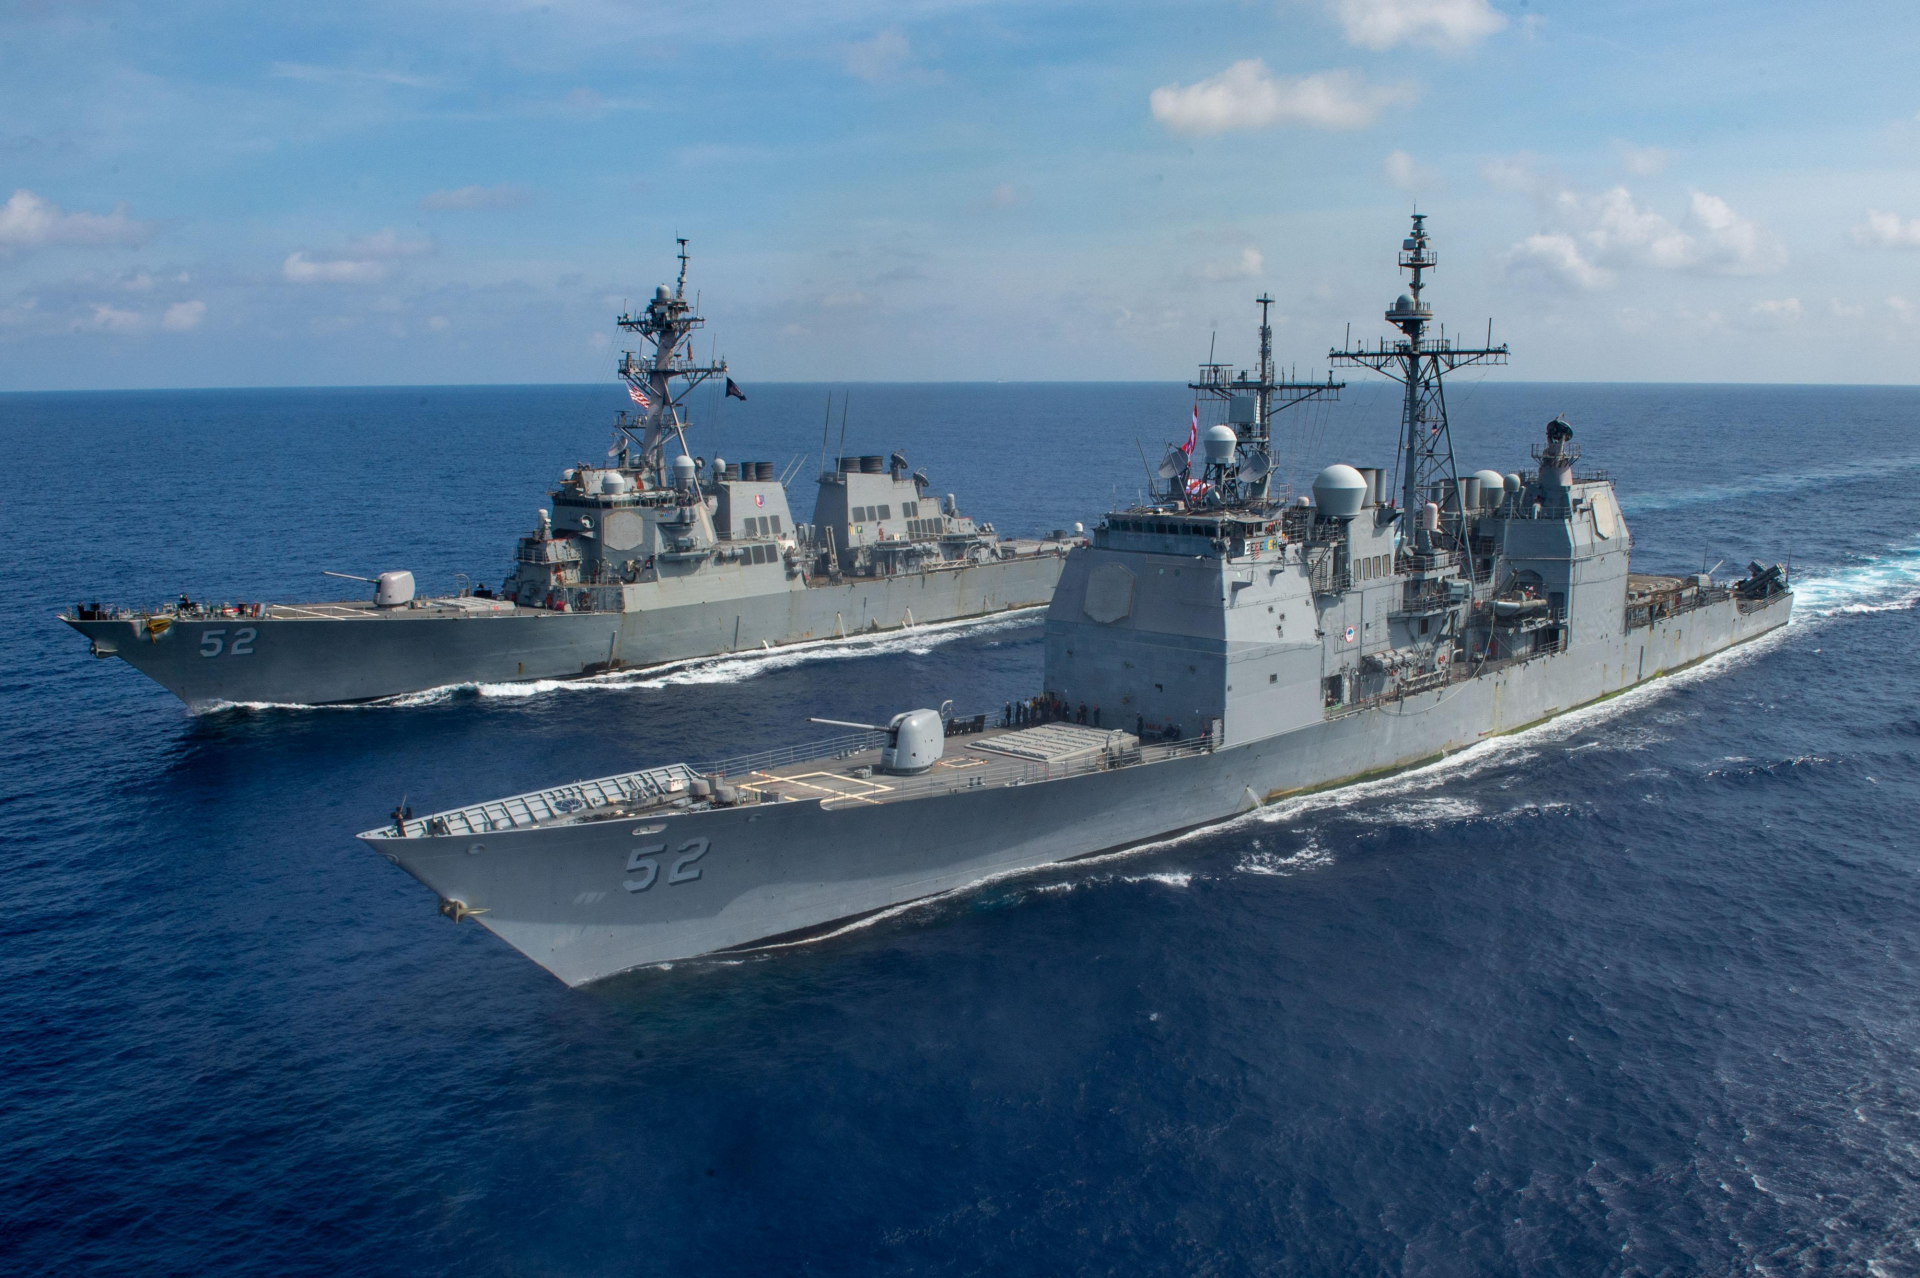 us sends warships on patrol near east sea standoff amid rising tensions